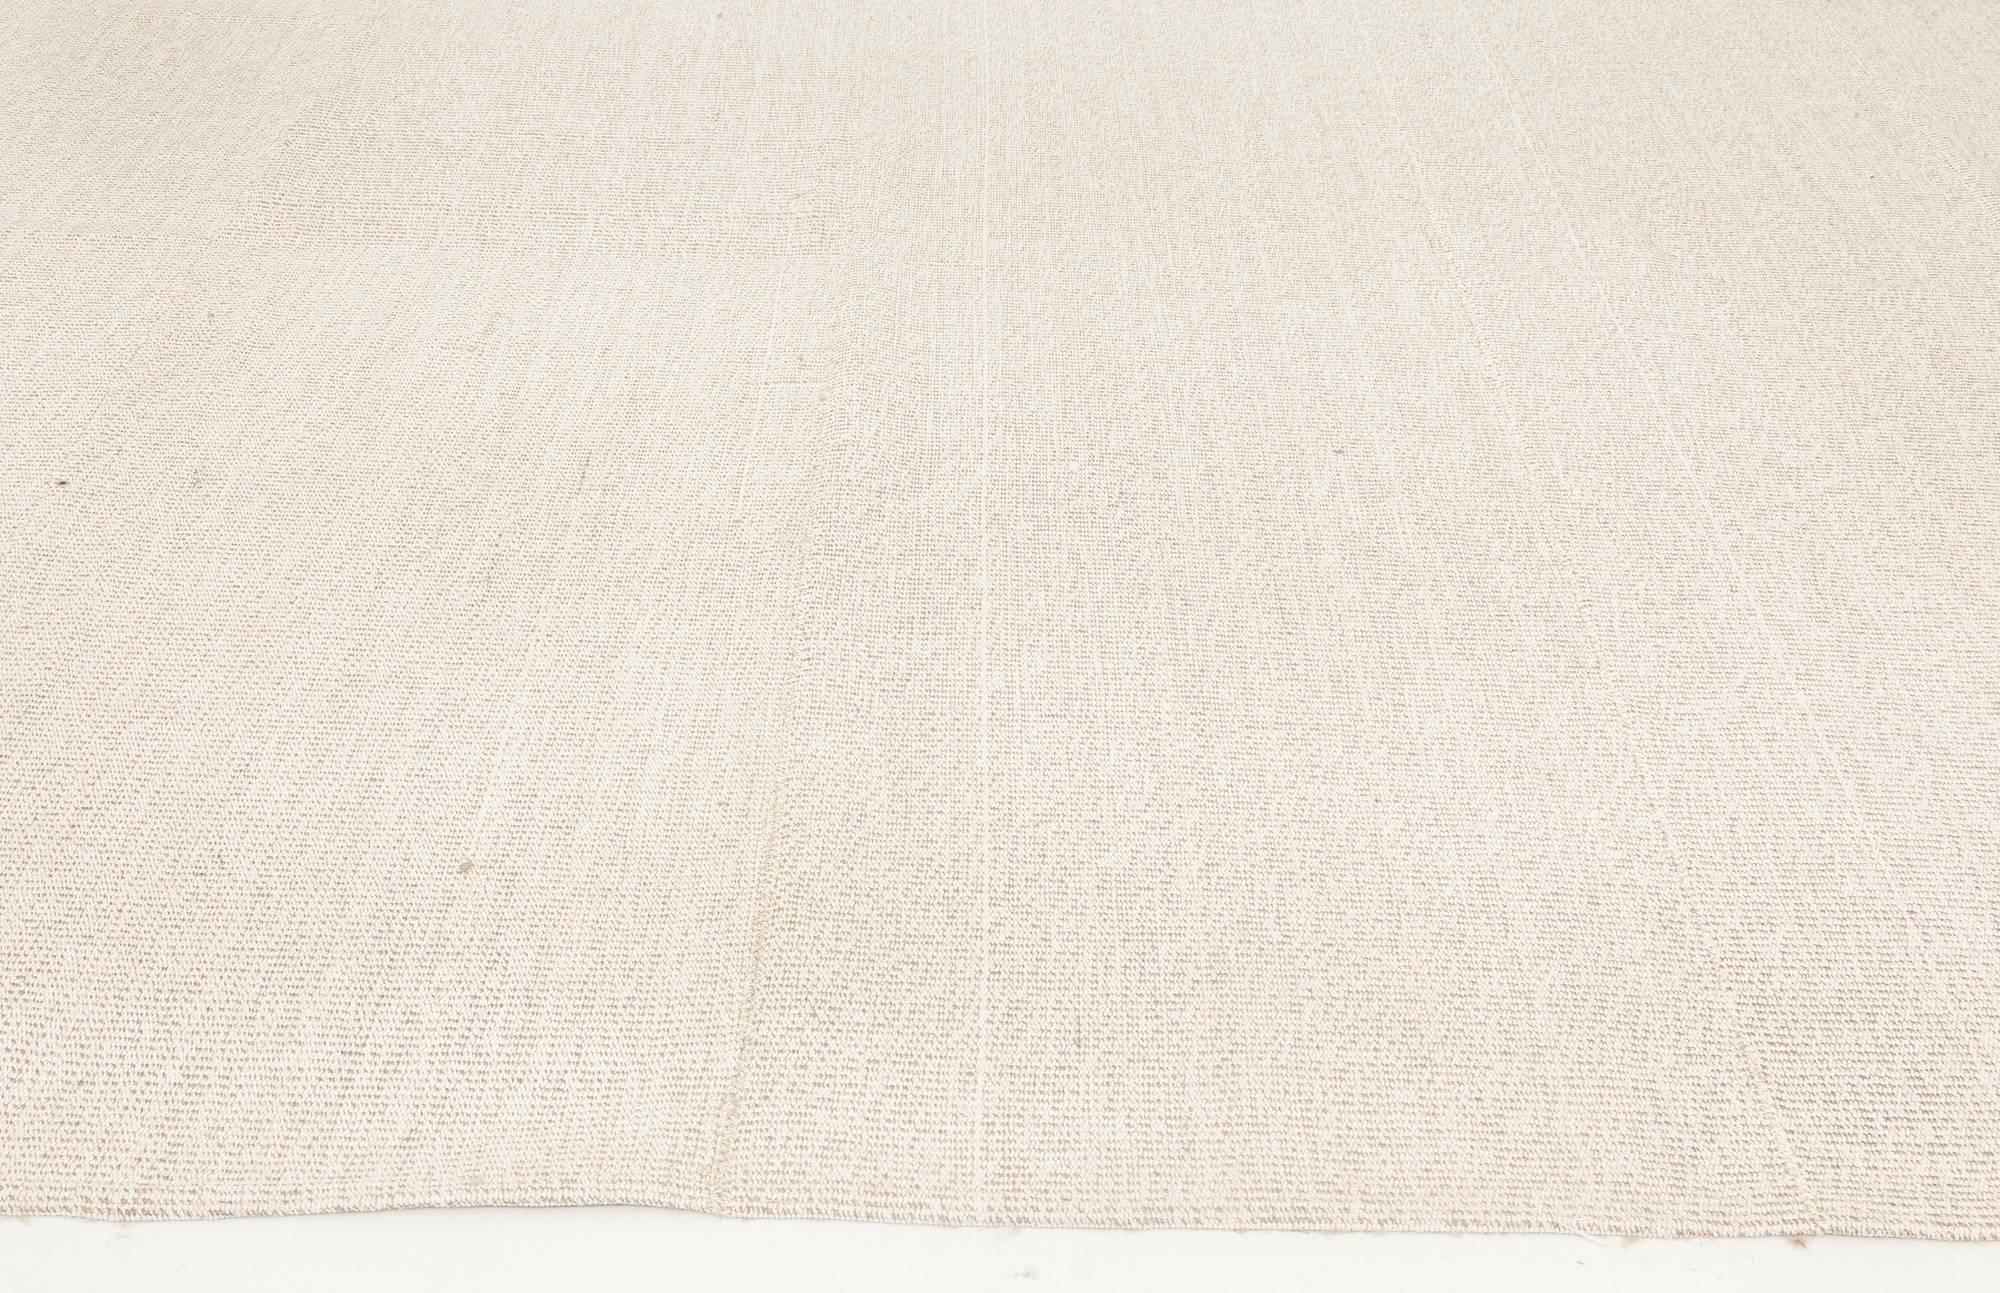 Indian Contemporary Sandy Beige Flat-Woven Wool Kilim Rug by Doris Leslie Blau For Sale